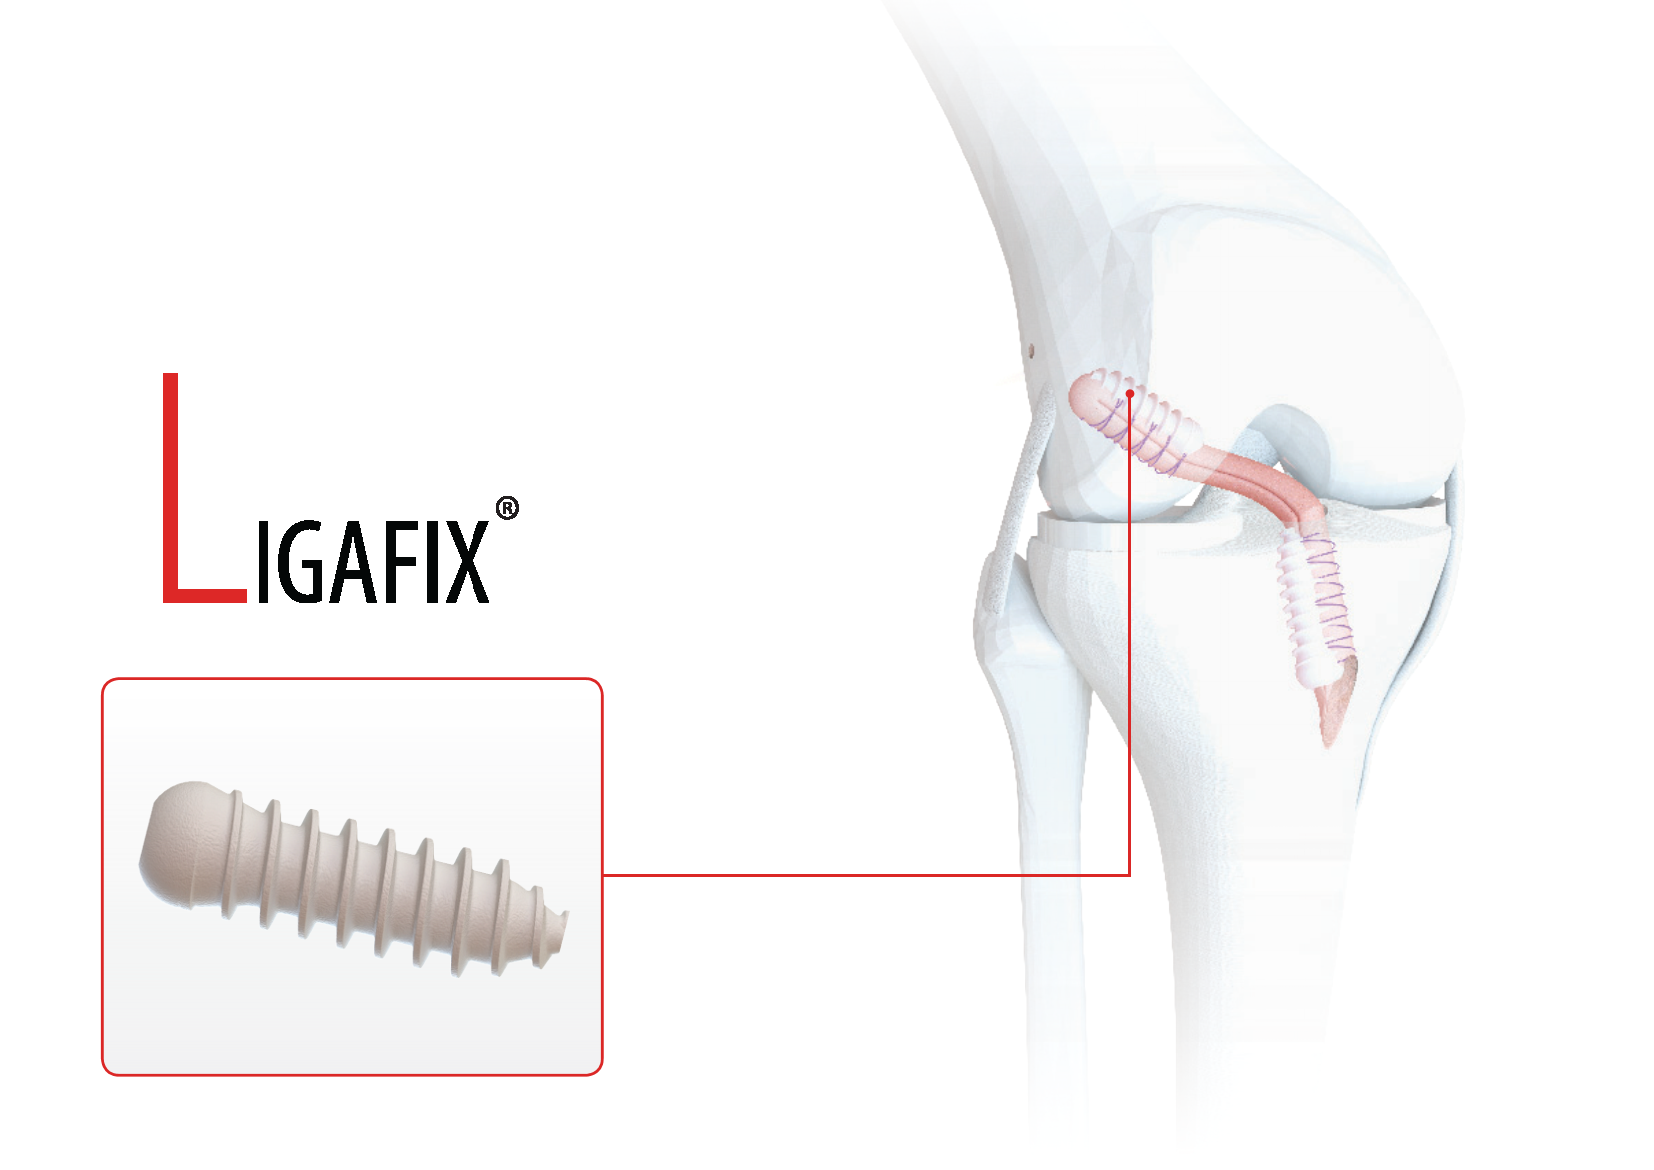 tornillo de fijación interferencial reabsorbible para artroscopia de rodilla